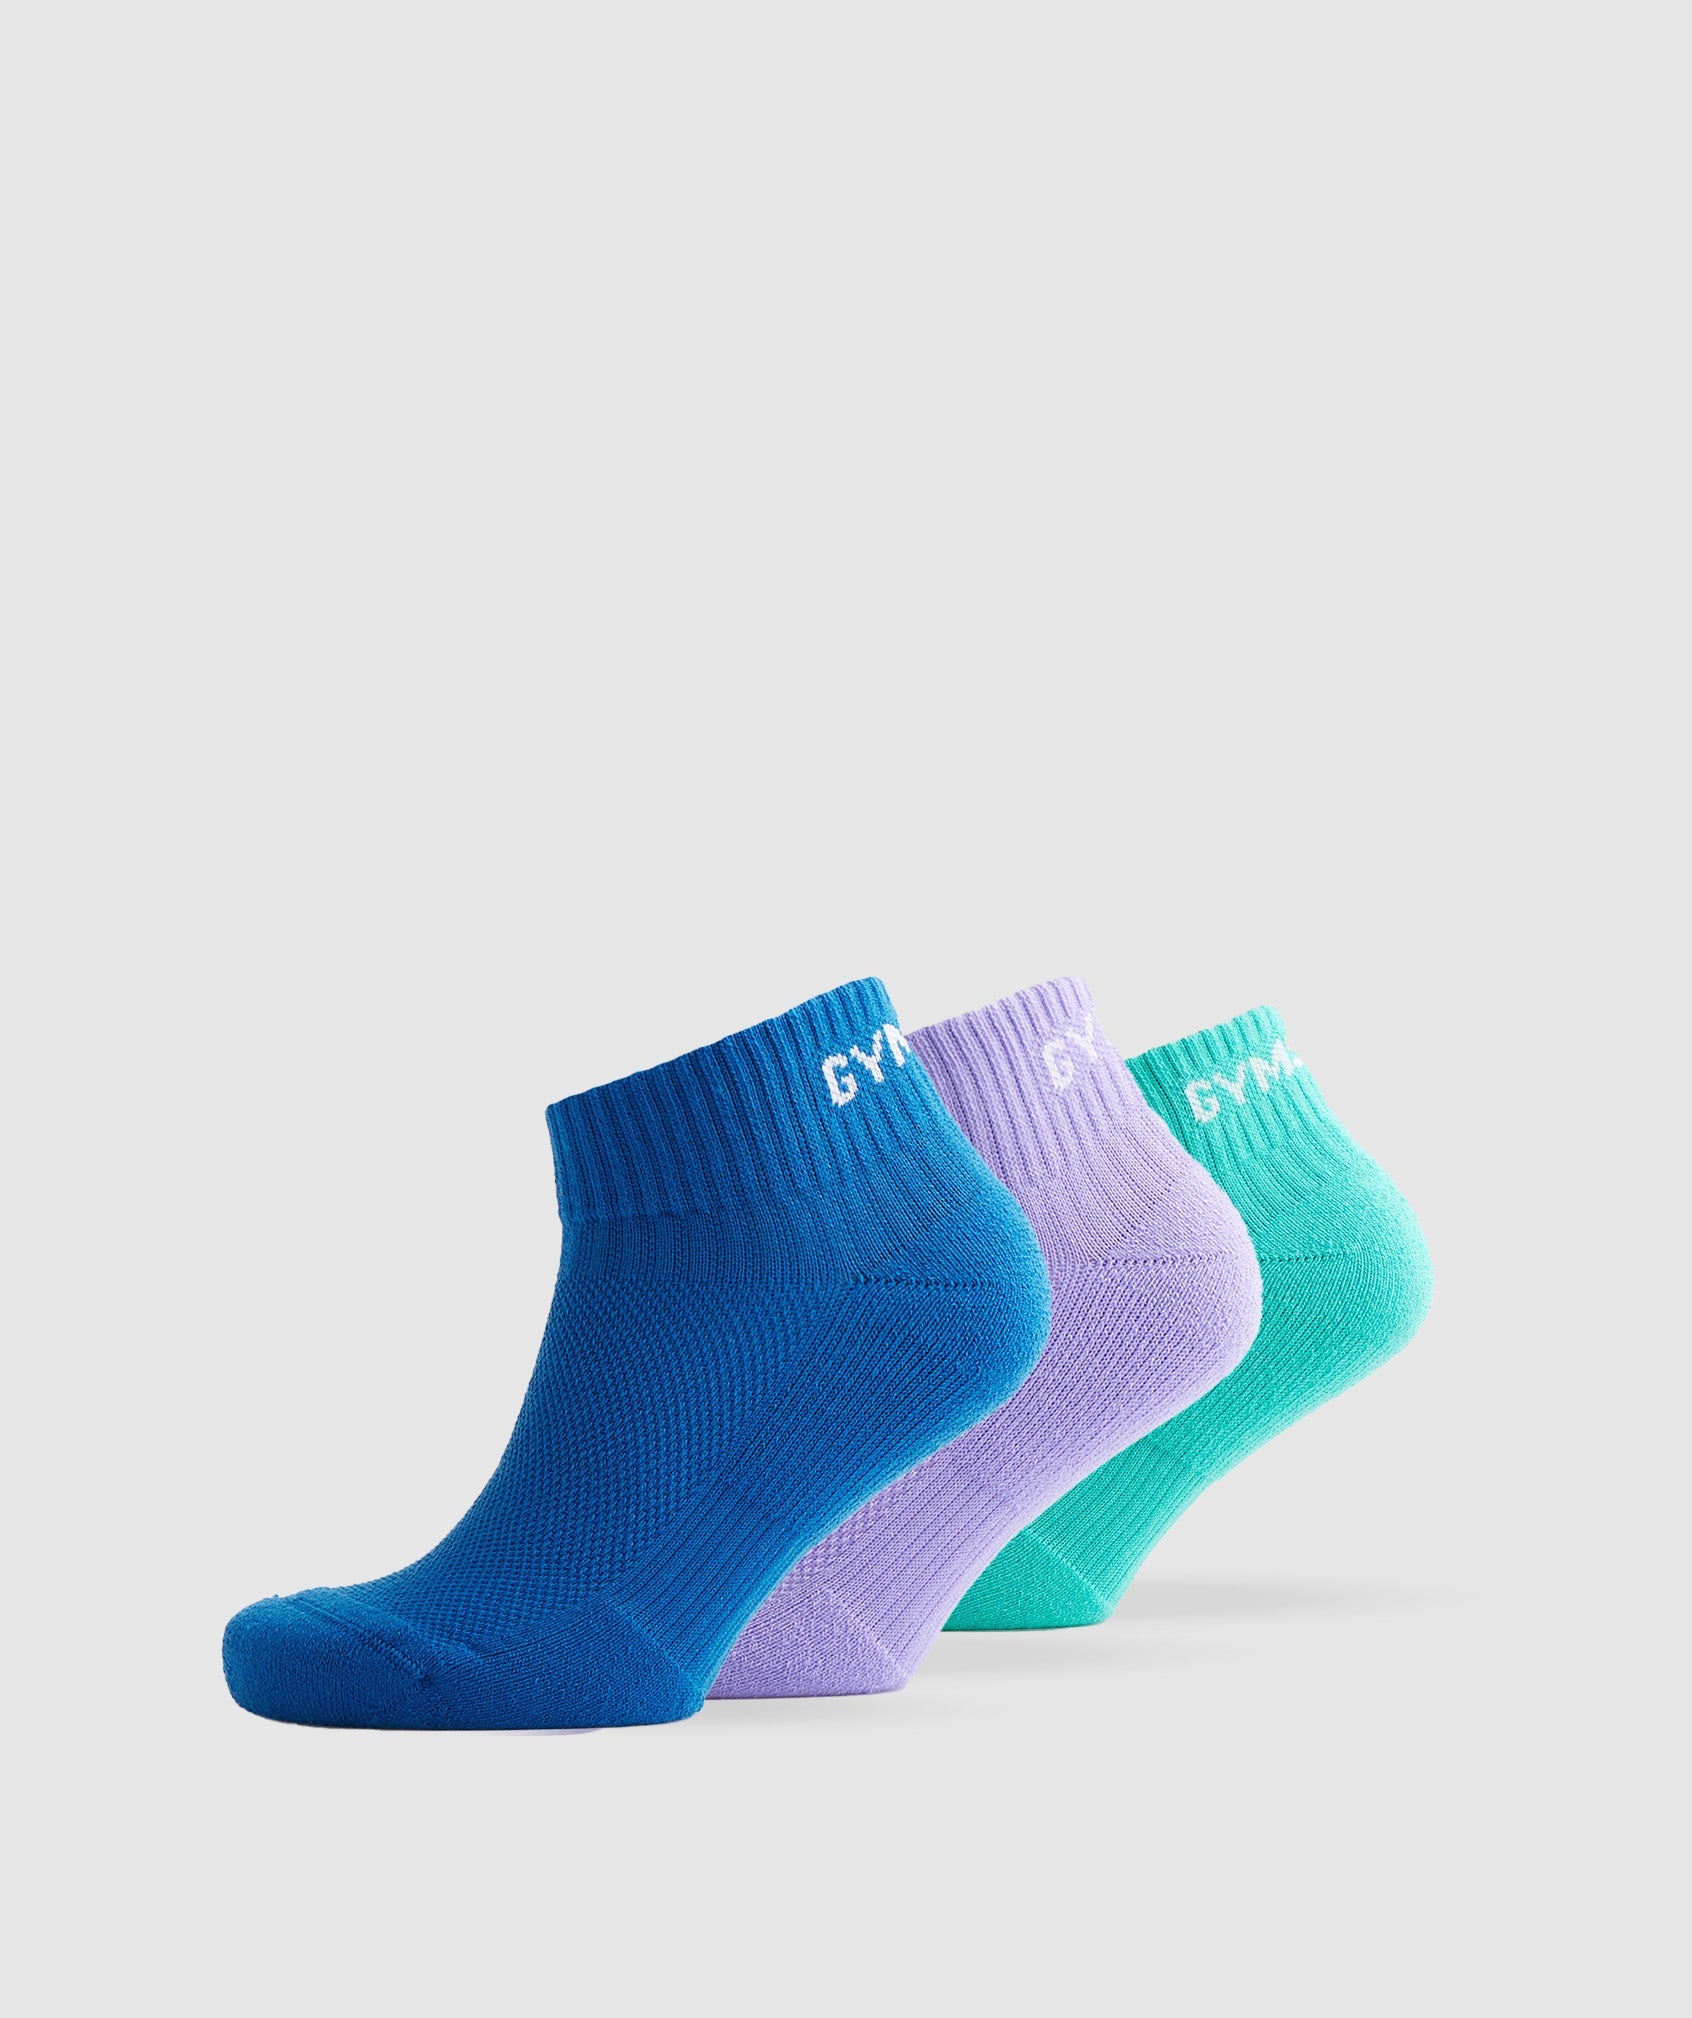 Jacquard Quarter Socks 3Pk in Aqua Blue/Digital Violet/Meridian Blue